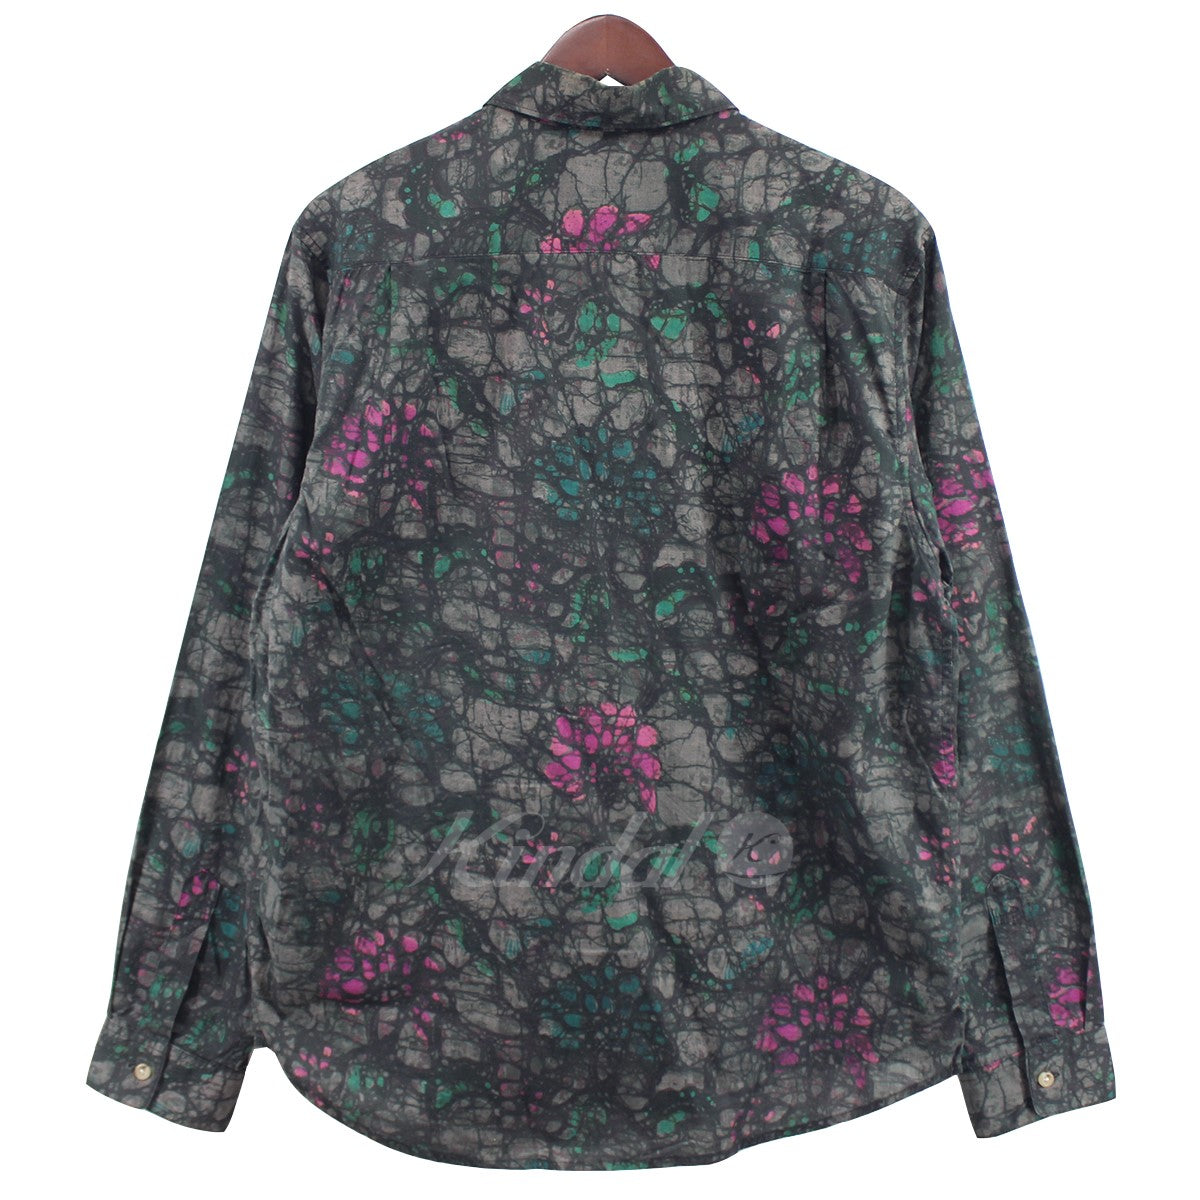 SUPREME(シュプリーム) 18AW Acid Floral Shirt アシッド フローラル シャツ